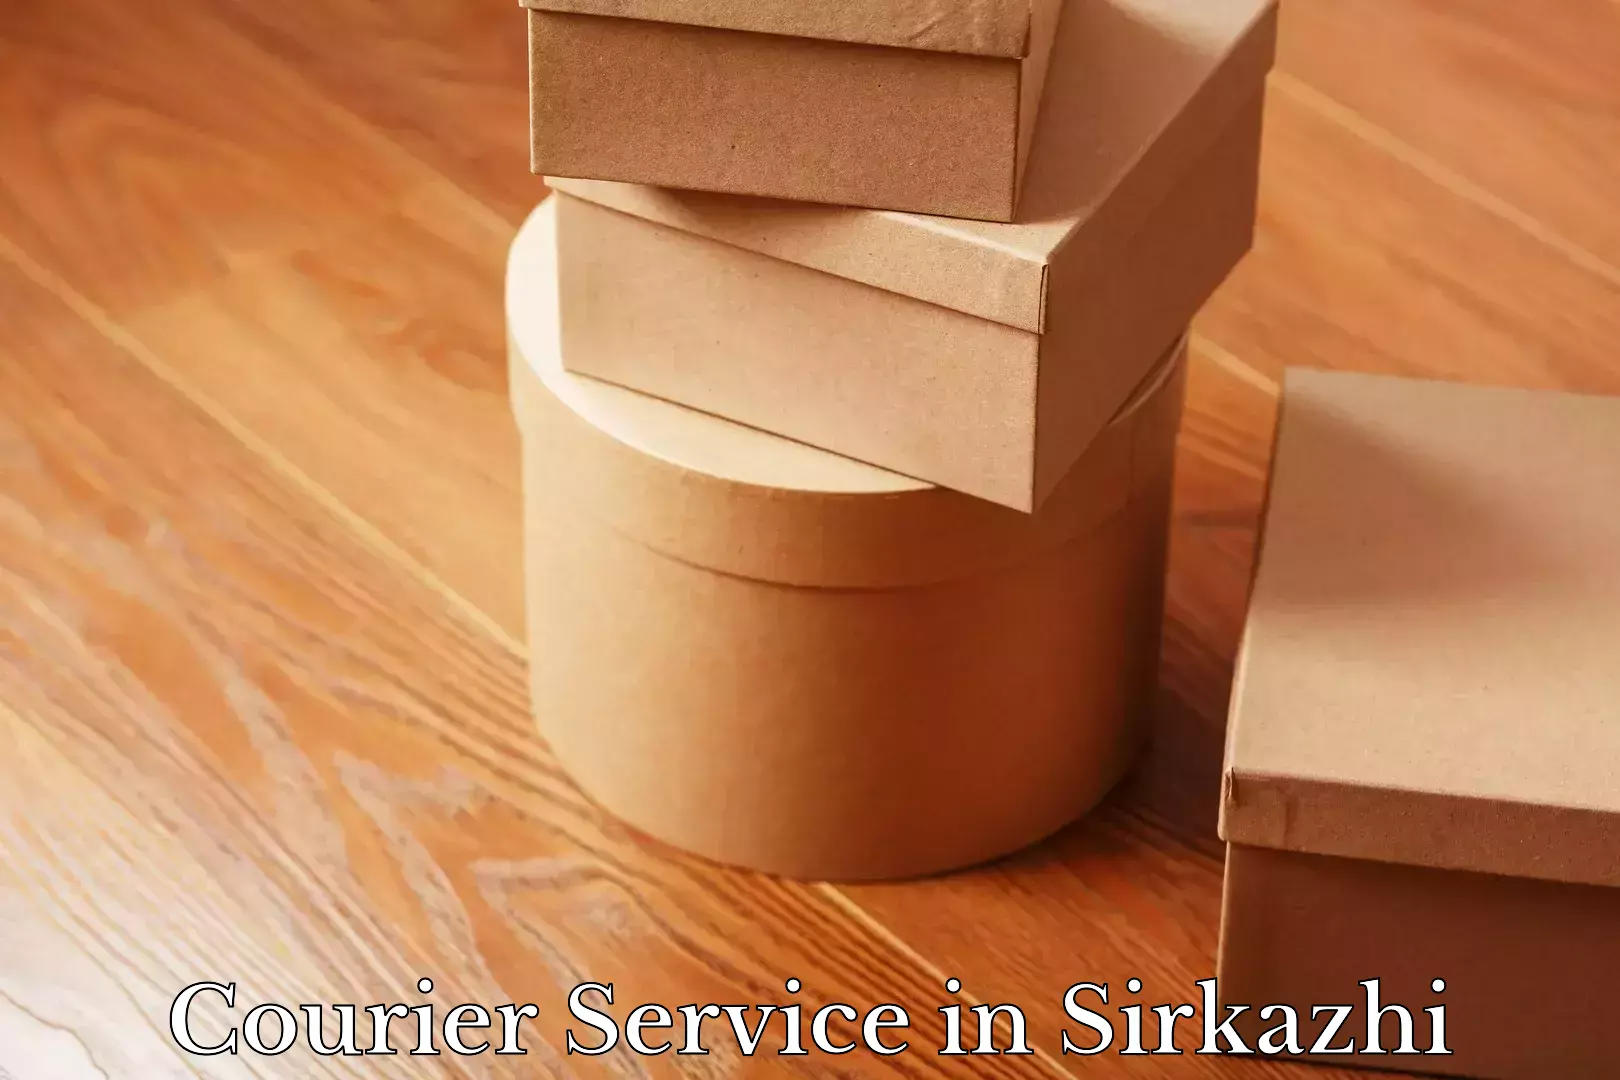 Logistics efficiency in Sirkazhi